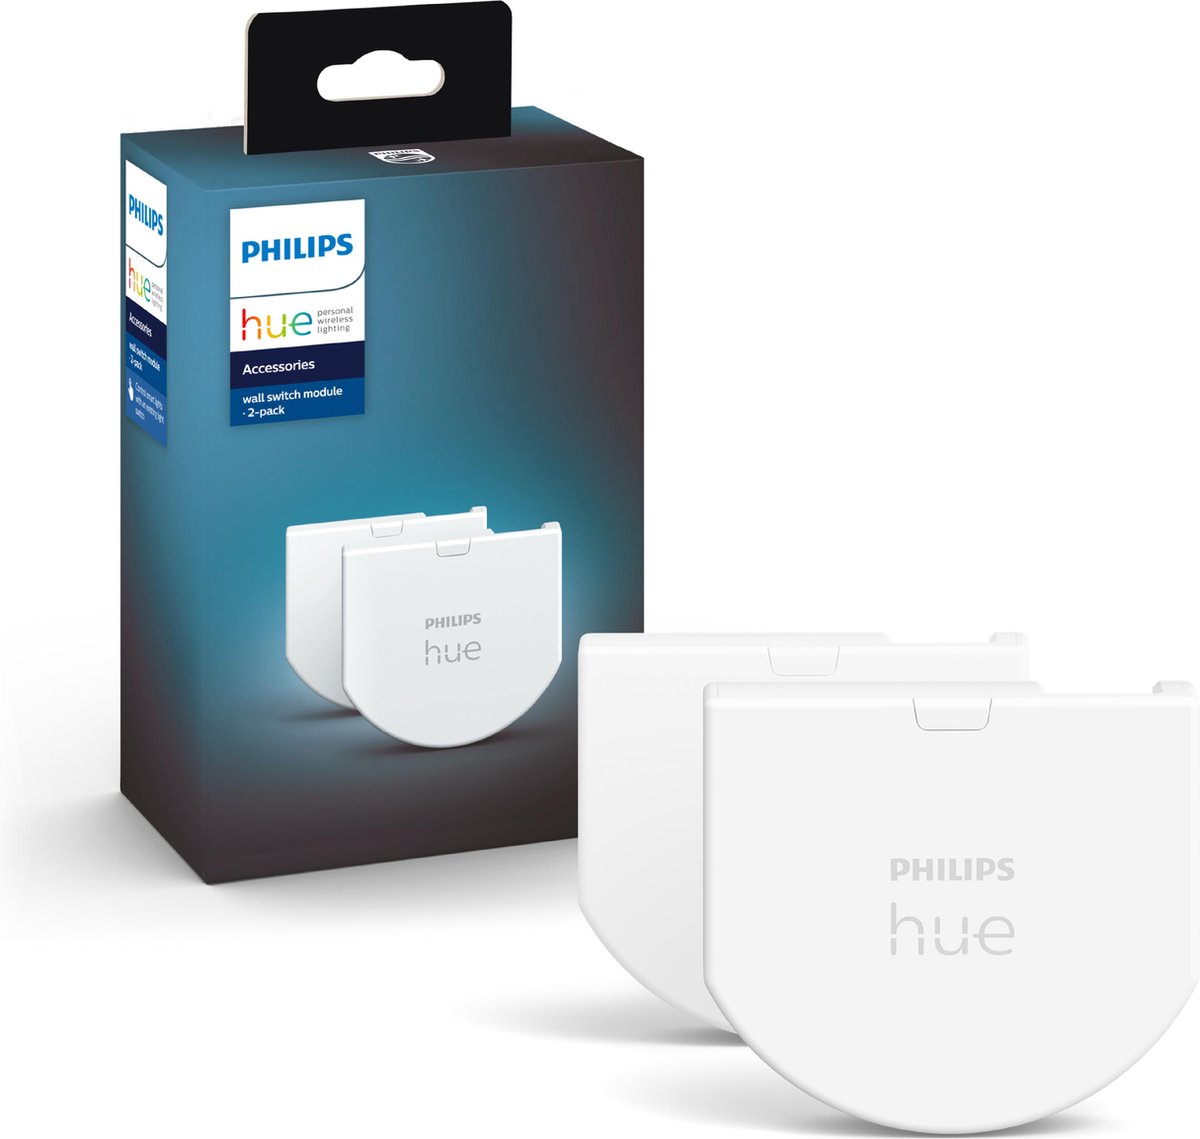 Philips Hue wall switch module slimme verlichting accessoire - 2 stuks - Philips Hue